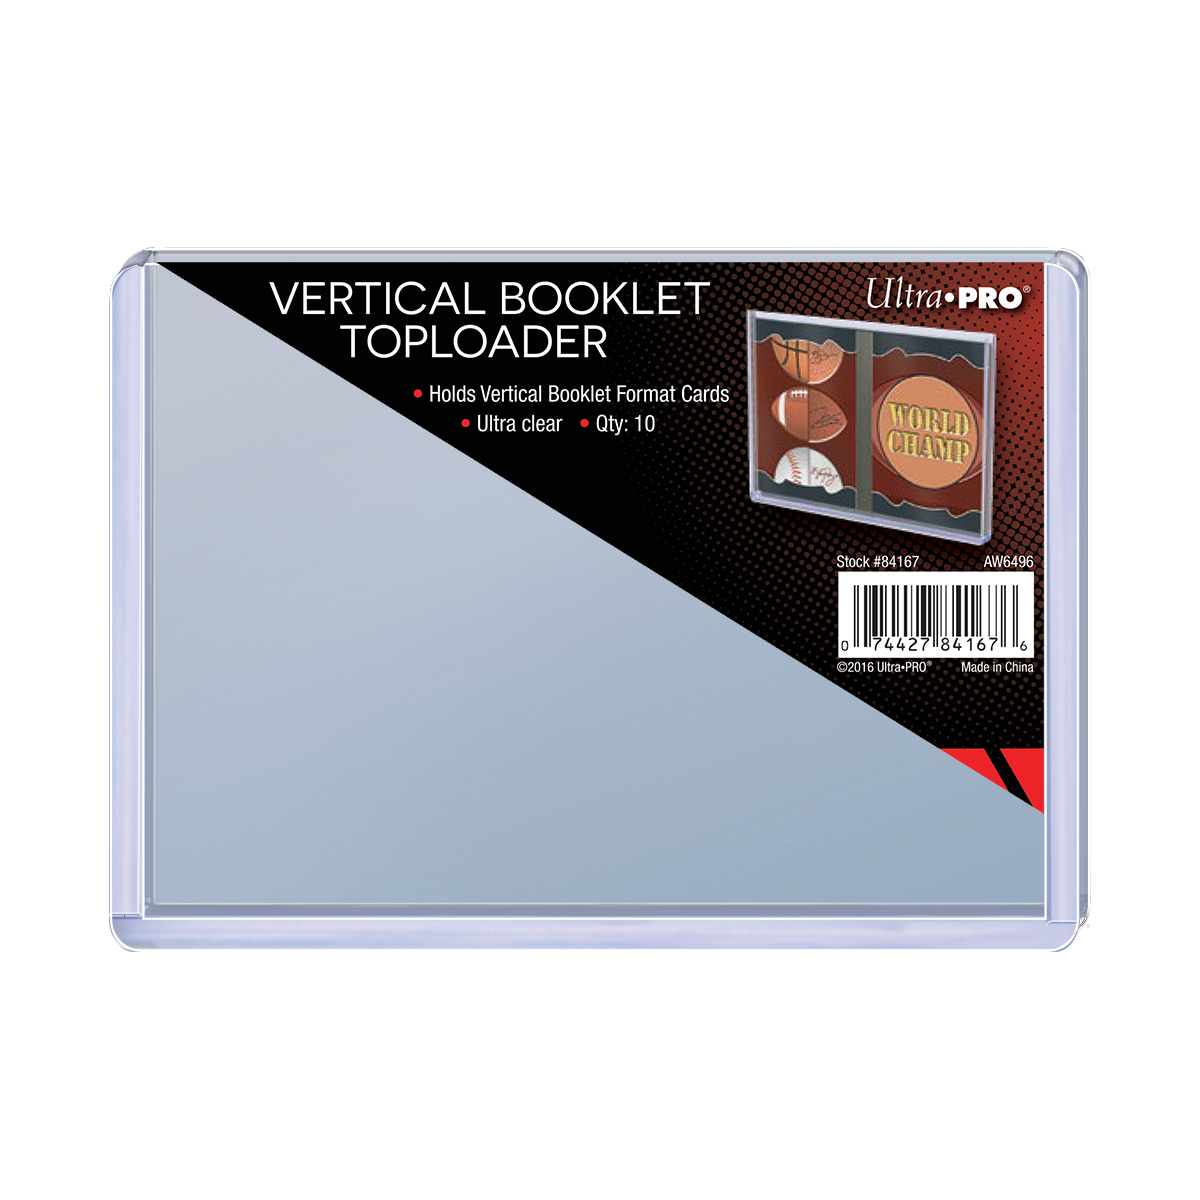 Vertical Booklet Card Toploaders (10ct) | Ultra PRO International